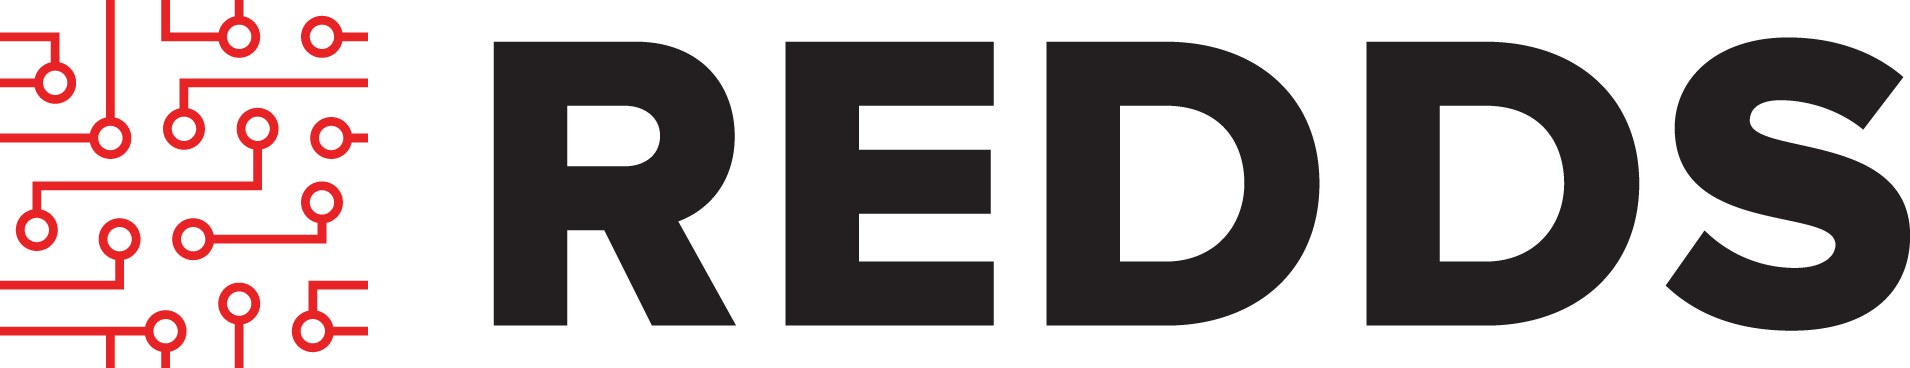 Redd's Logo - REDDS Capital | Home